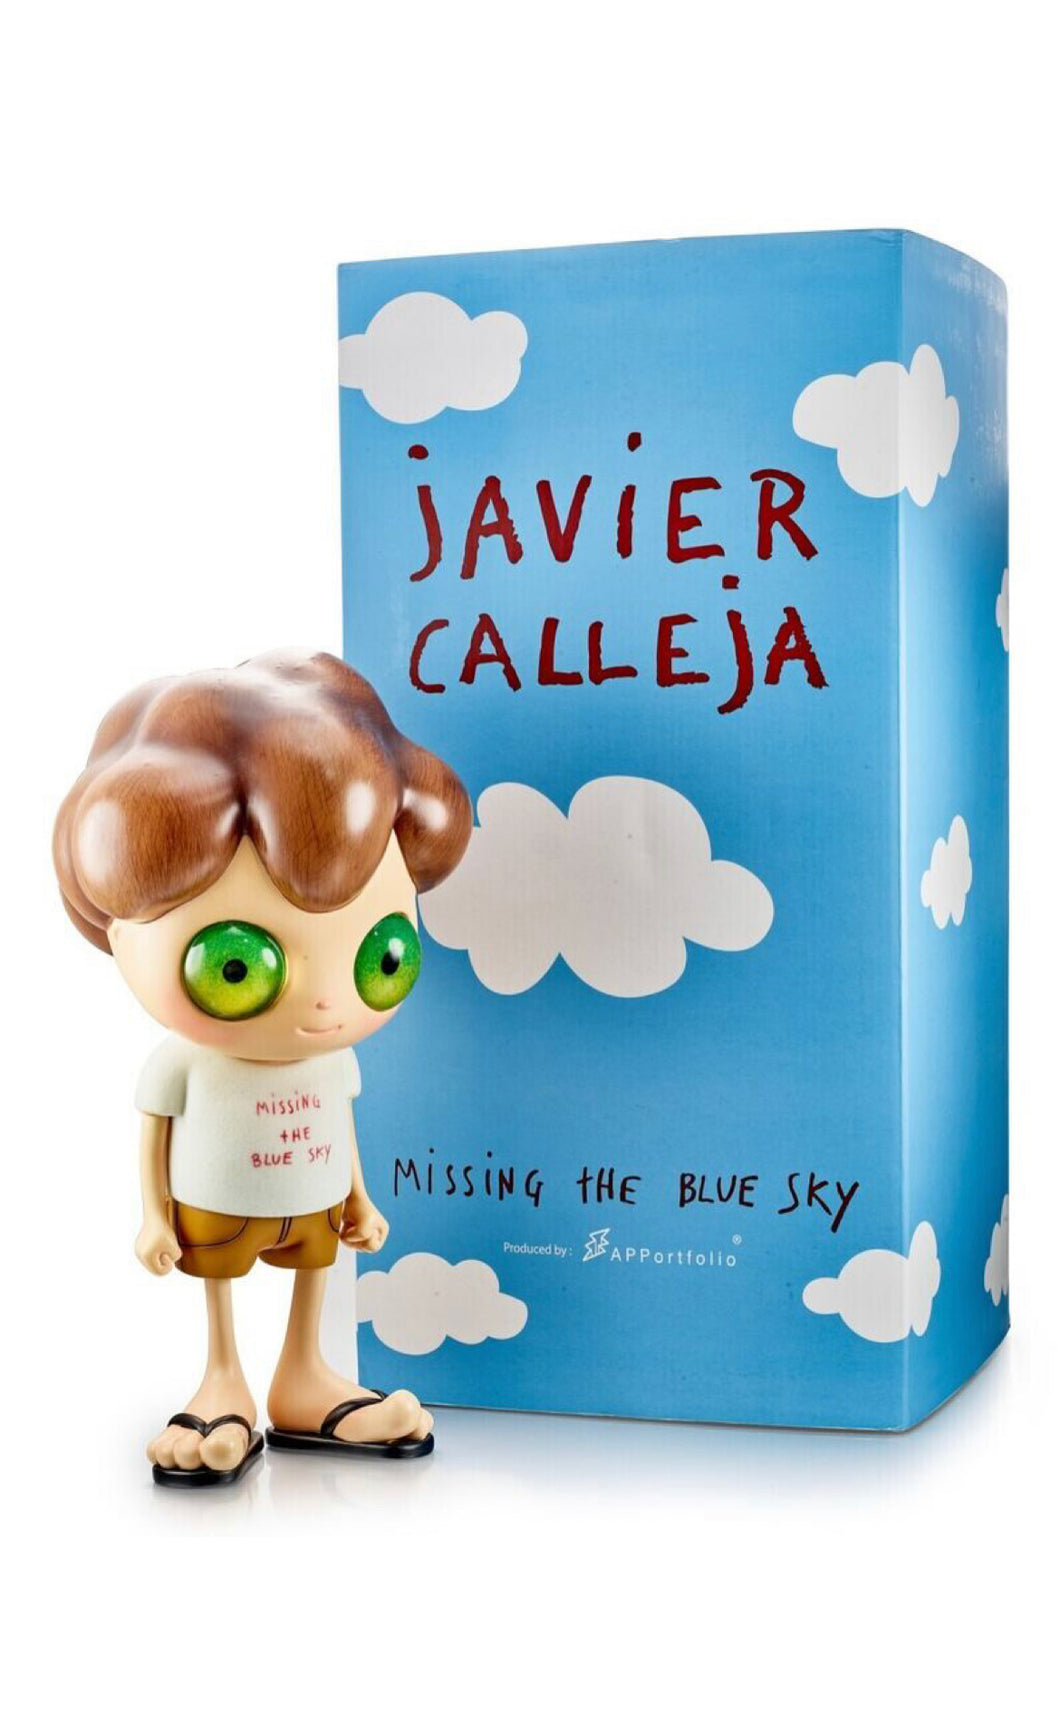 Javier Calleja - “Missing the Blue Sky”